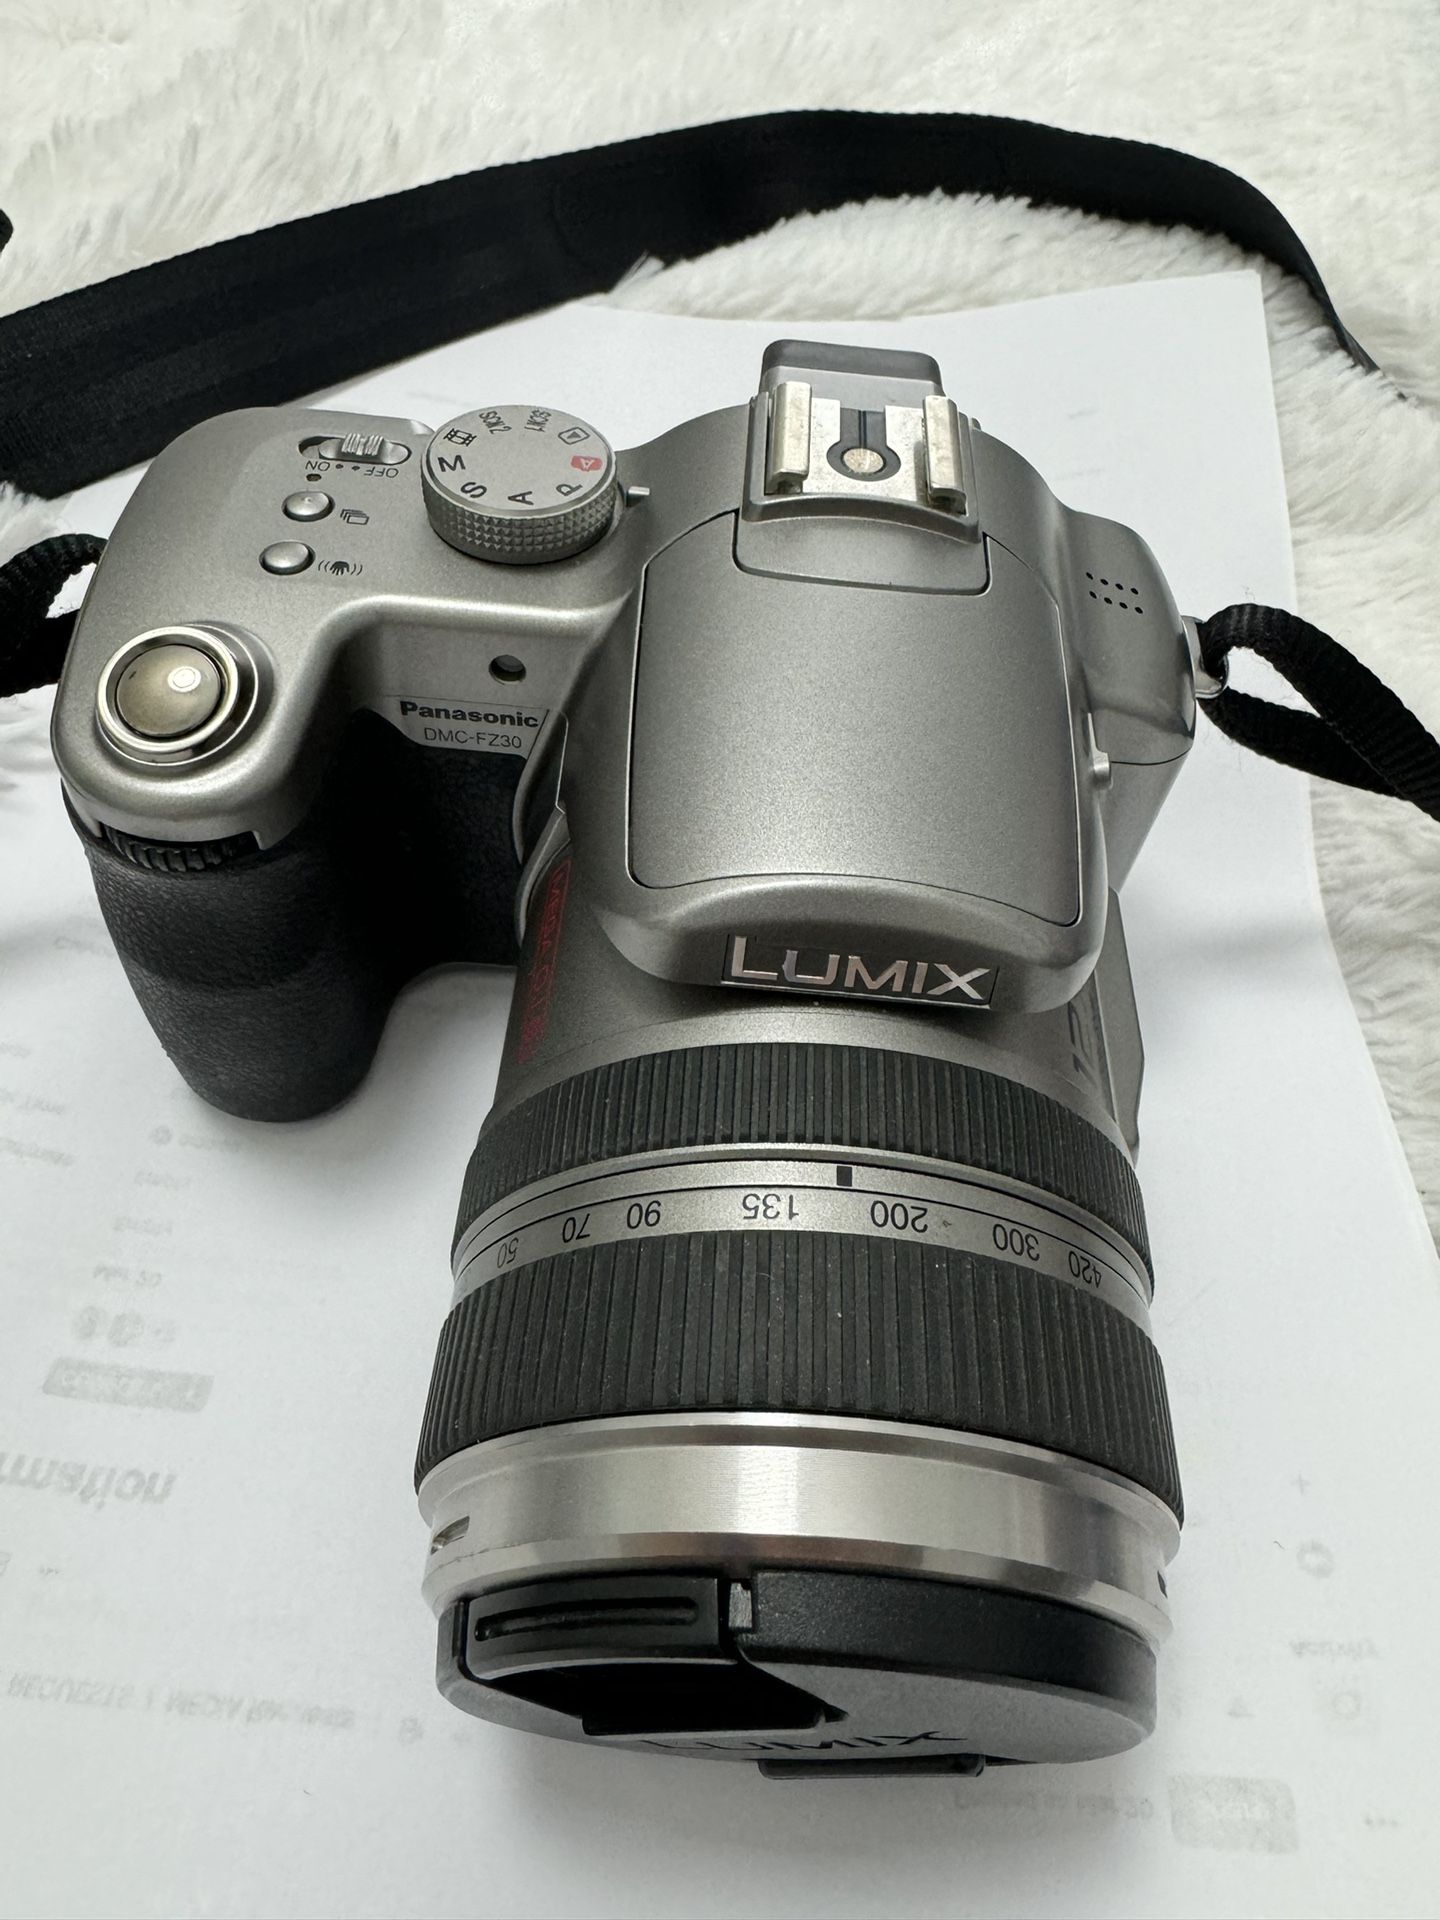 Panasonic Lumix Camera And Tele Conversion Lens